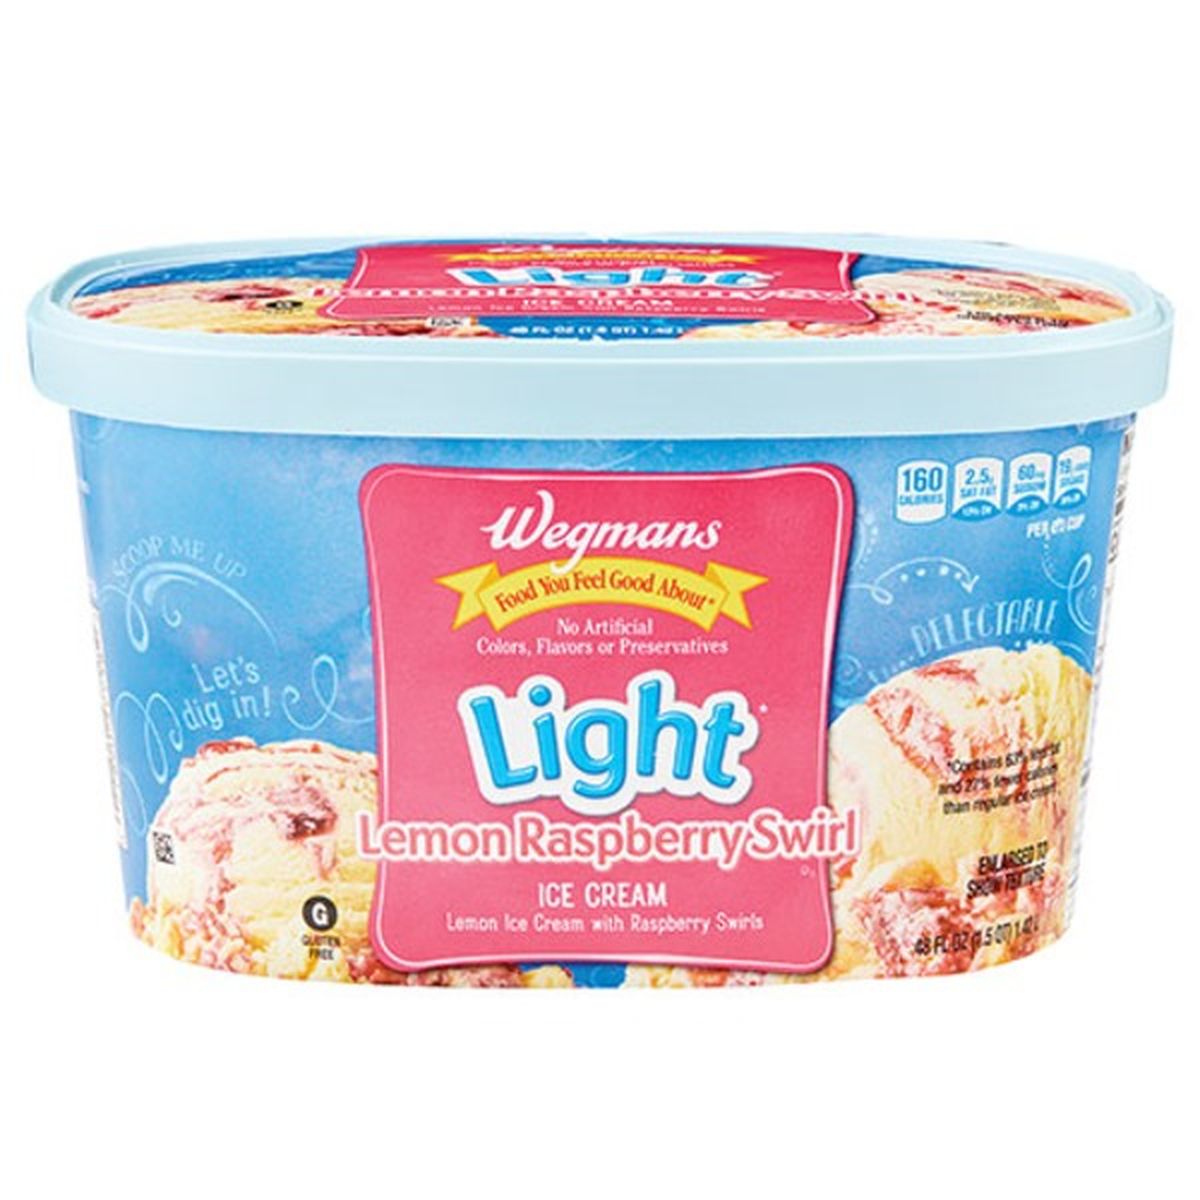 Calories in Wegmans Light* Lemon Raspberry Swirl Ice Cream